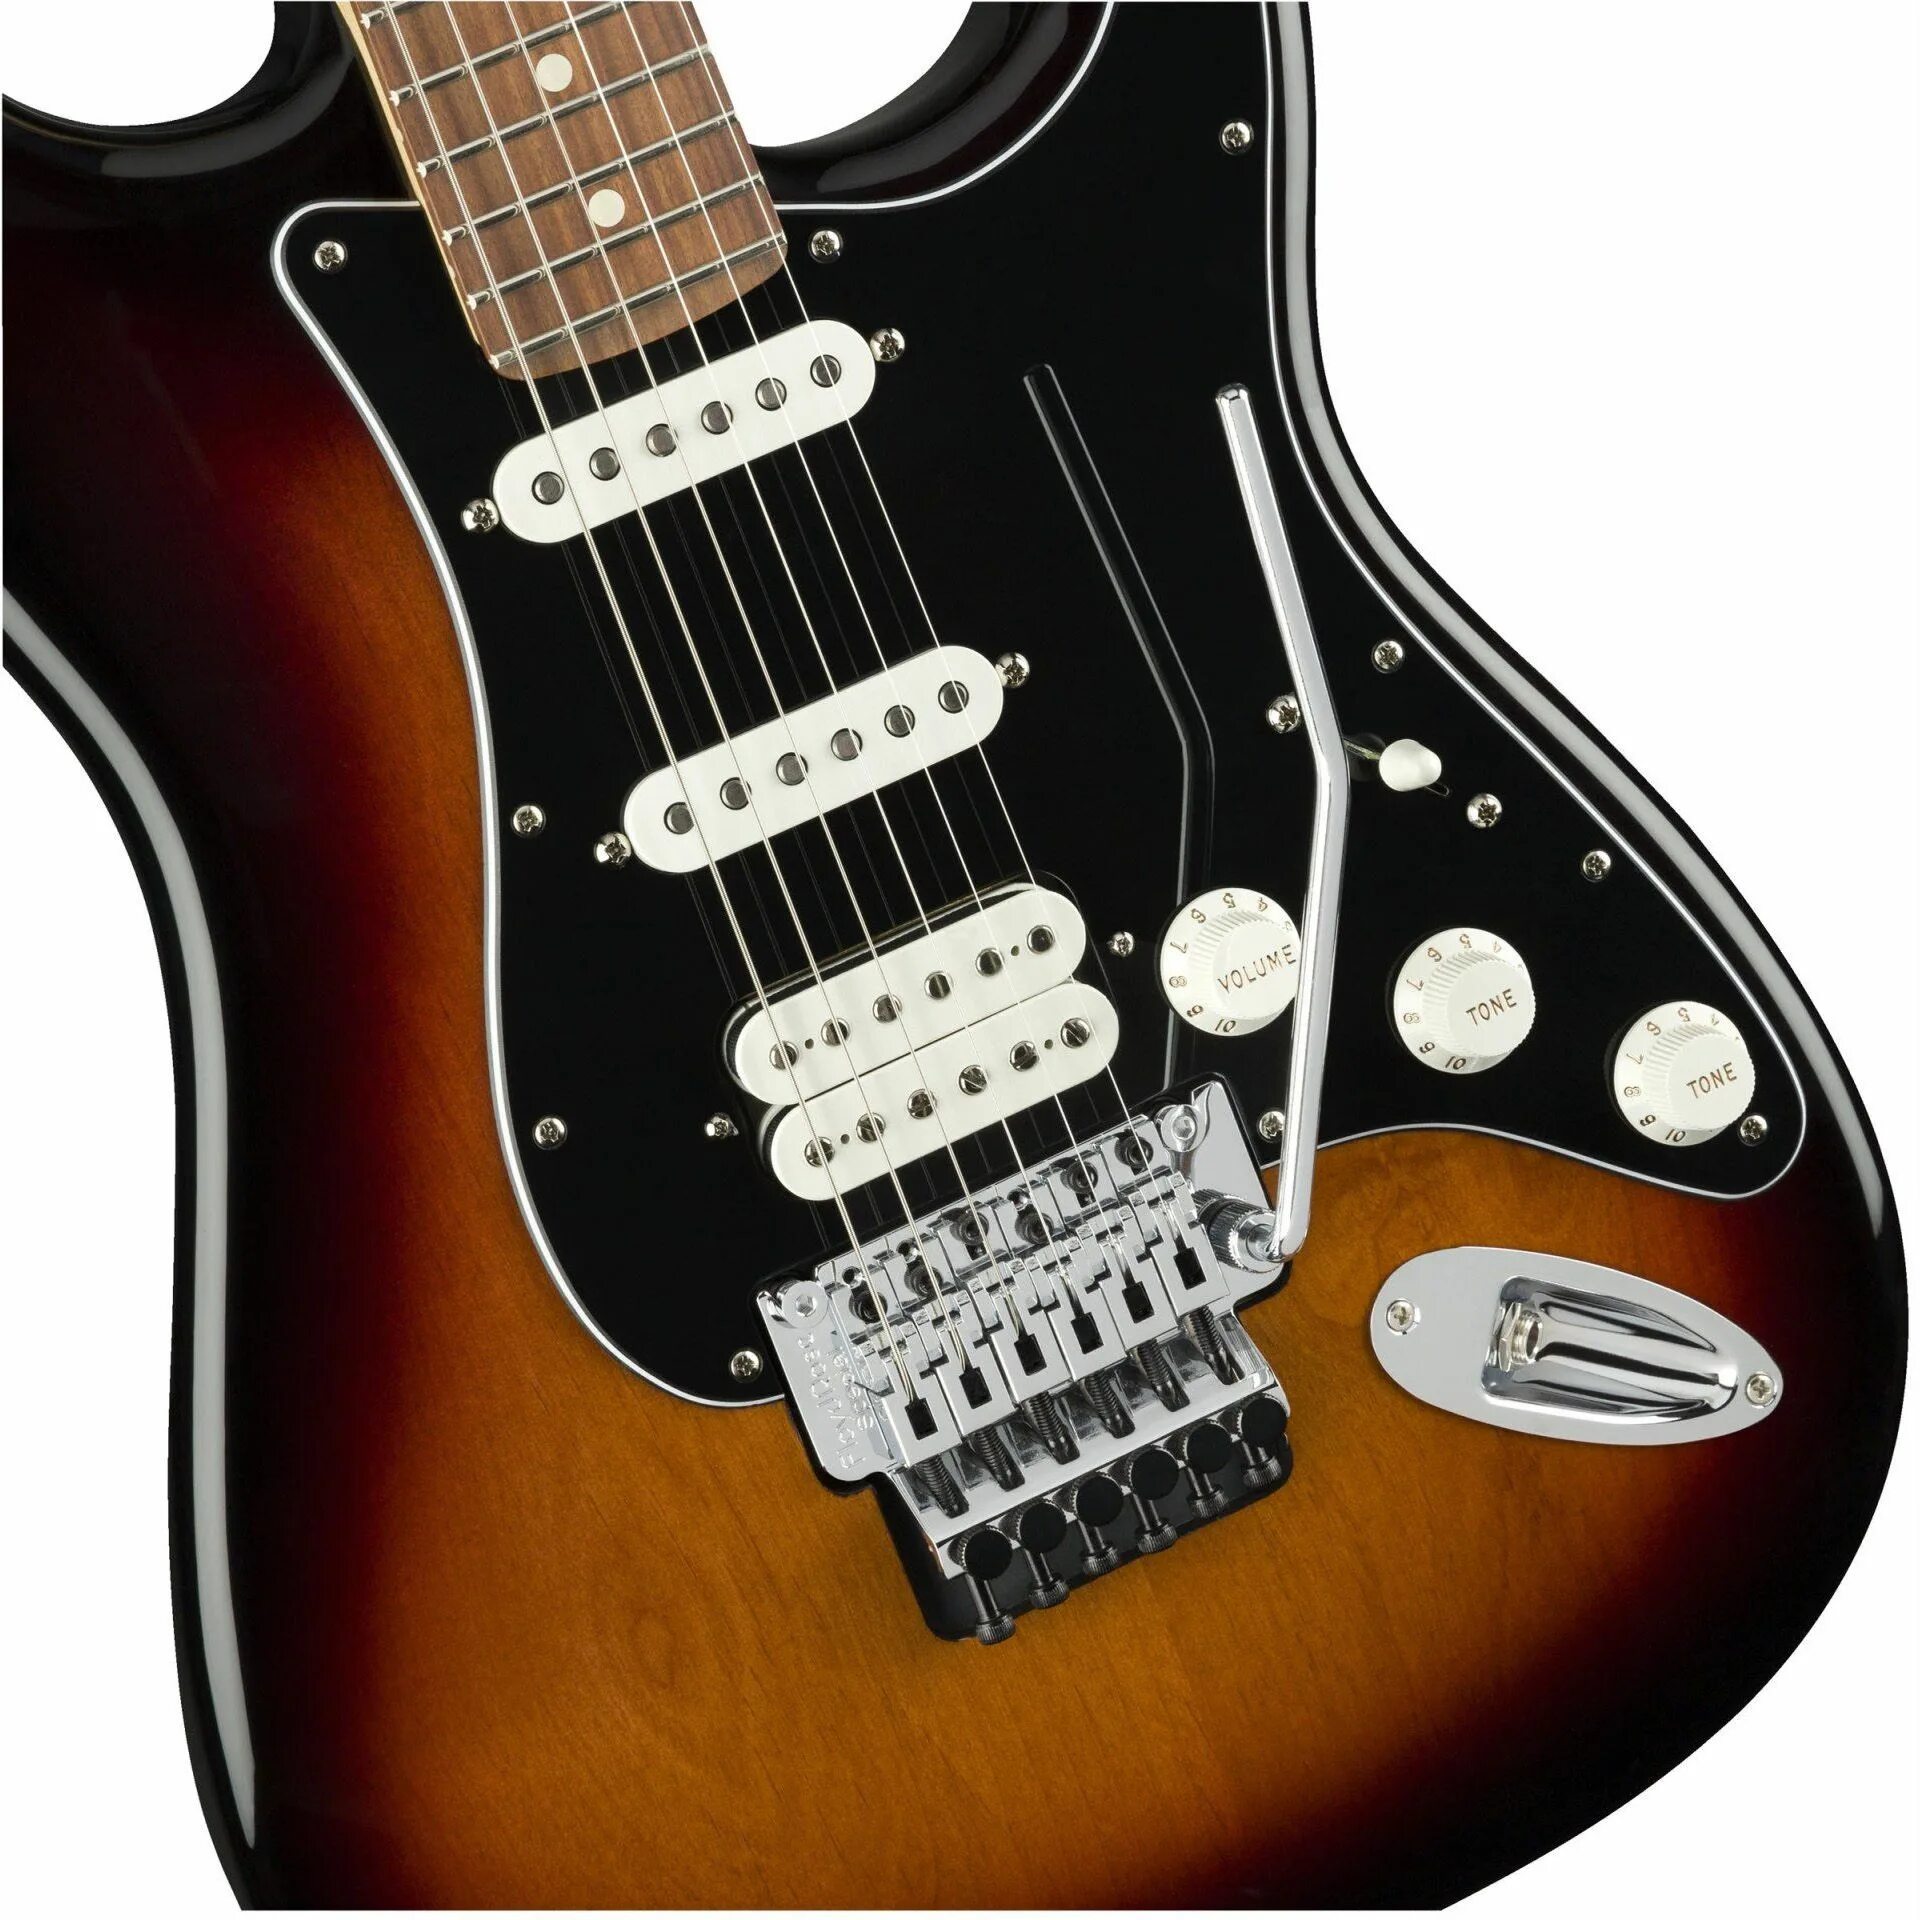 Гитара Stratocaster Floyd Rose. Фендер стратокастер с Флойд Роуз. Гитара Fender Floyd Rose. Фендер стратокастер санберст.